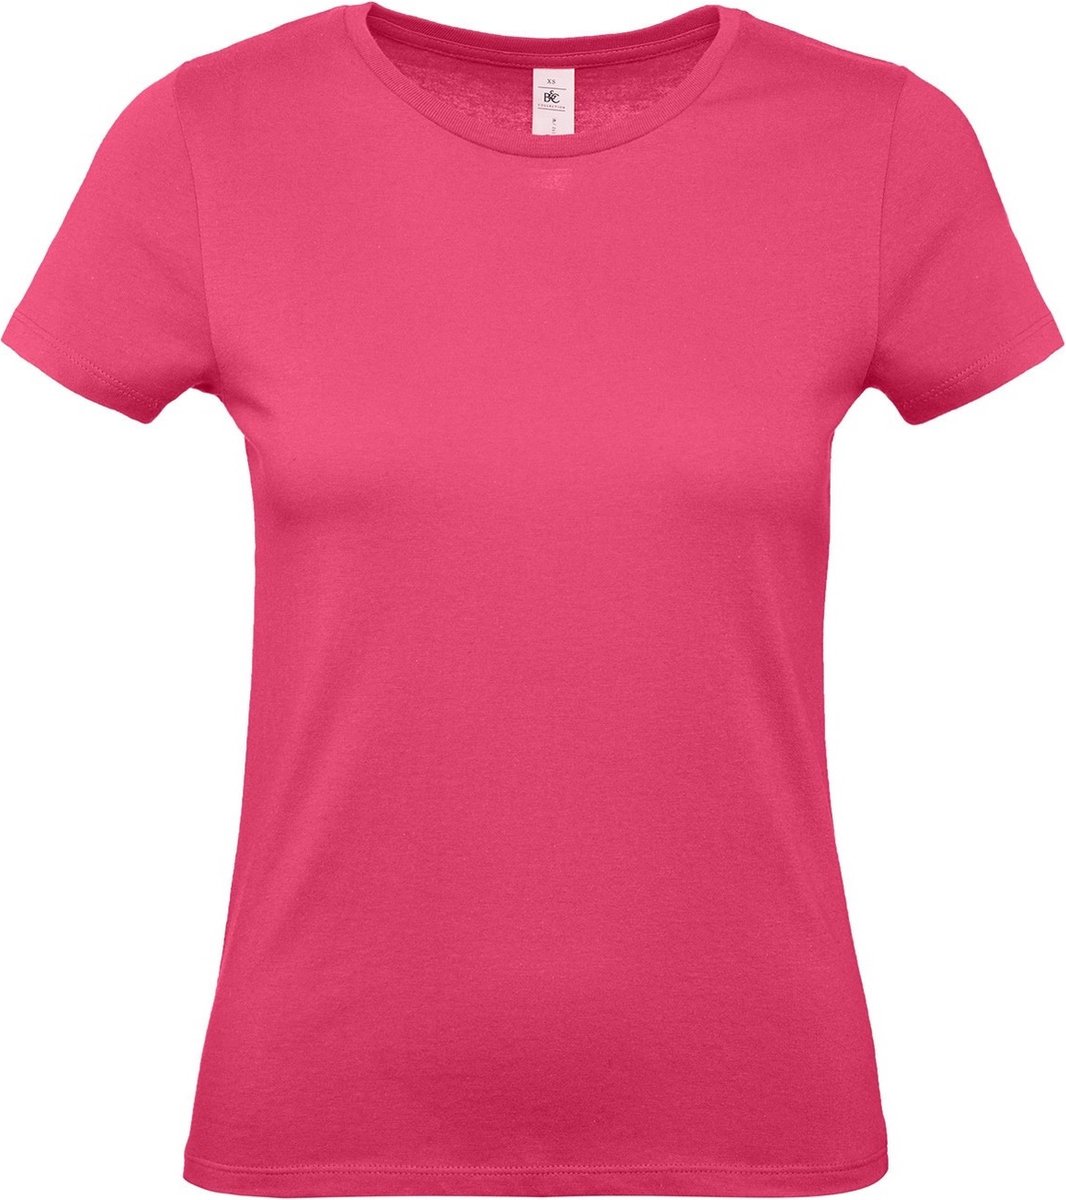 Fuchsia roze basic t-shirts met ronde hals voor dames - katoen - 145 grams - shirts / kleding XL (42)